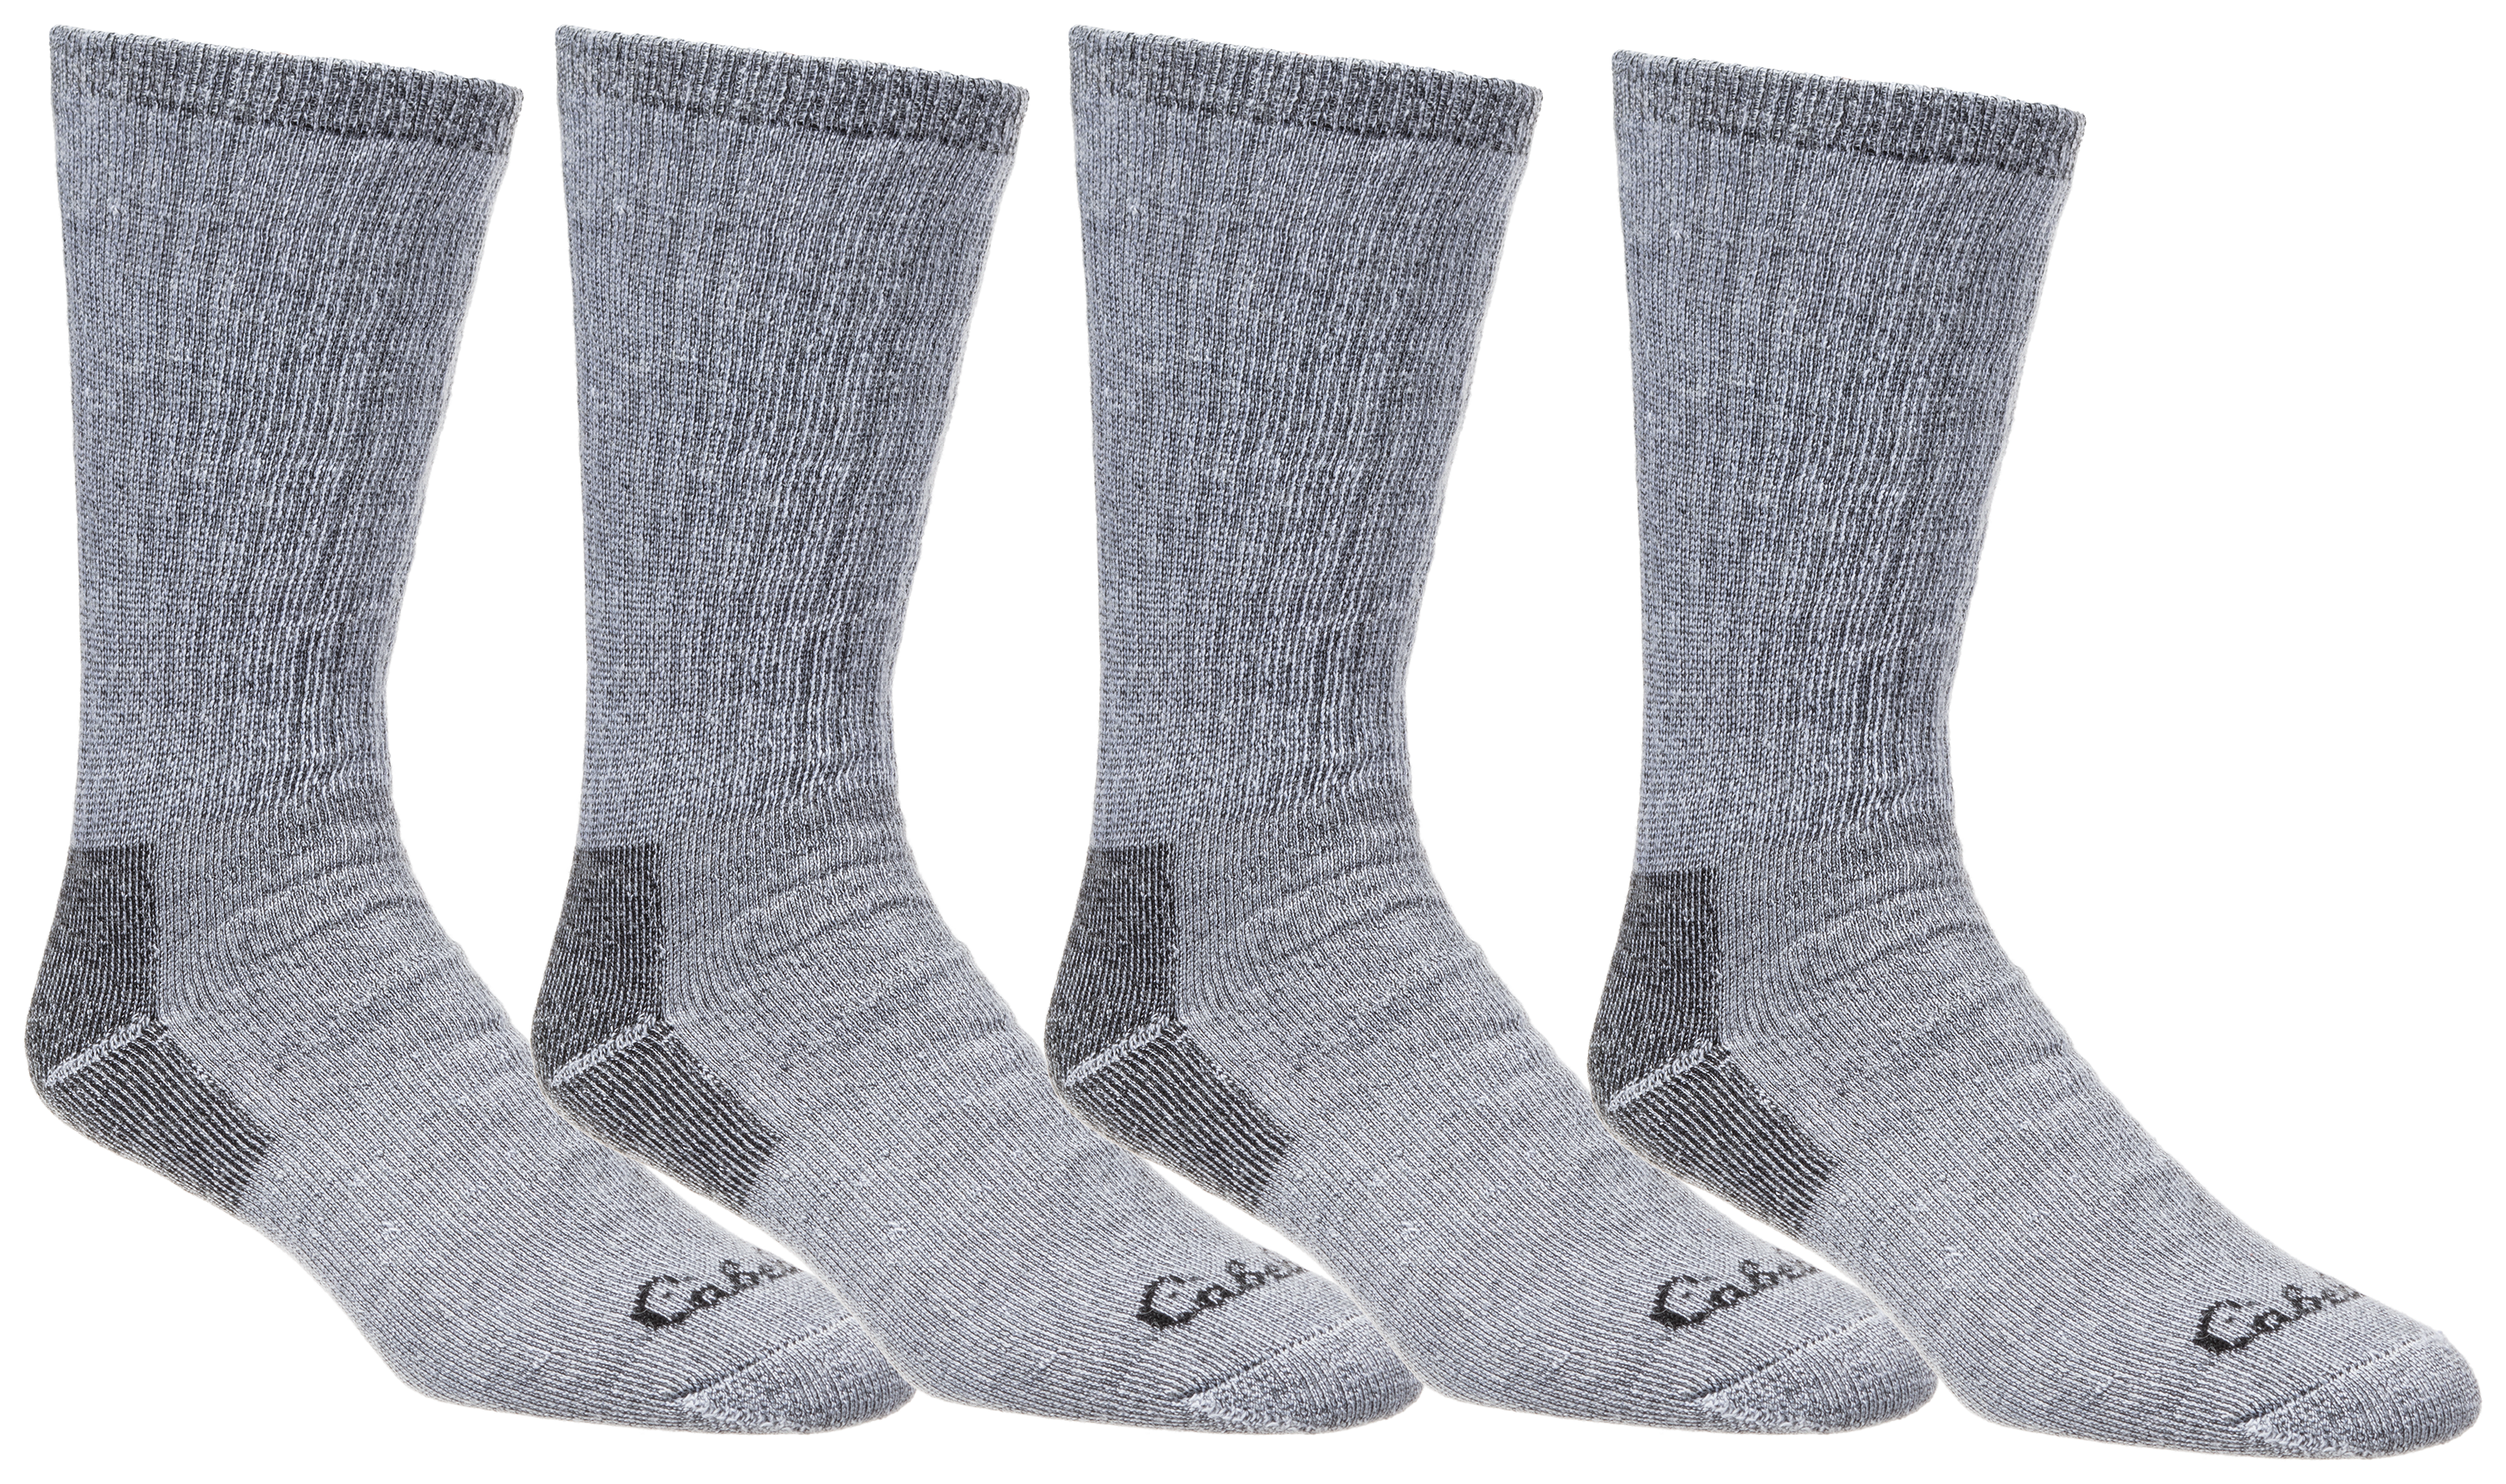 Cabela's Over-The-Calf Polypropylene Liner Socks 2-Pair Pack